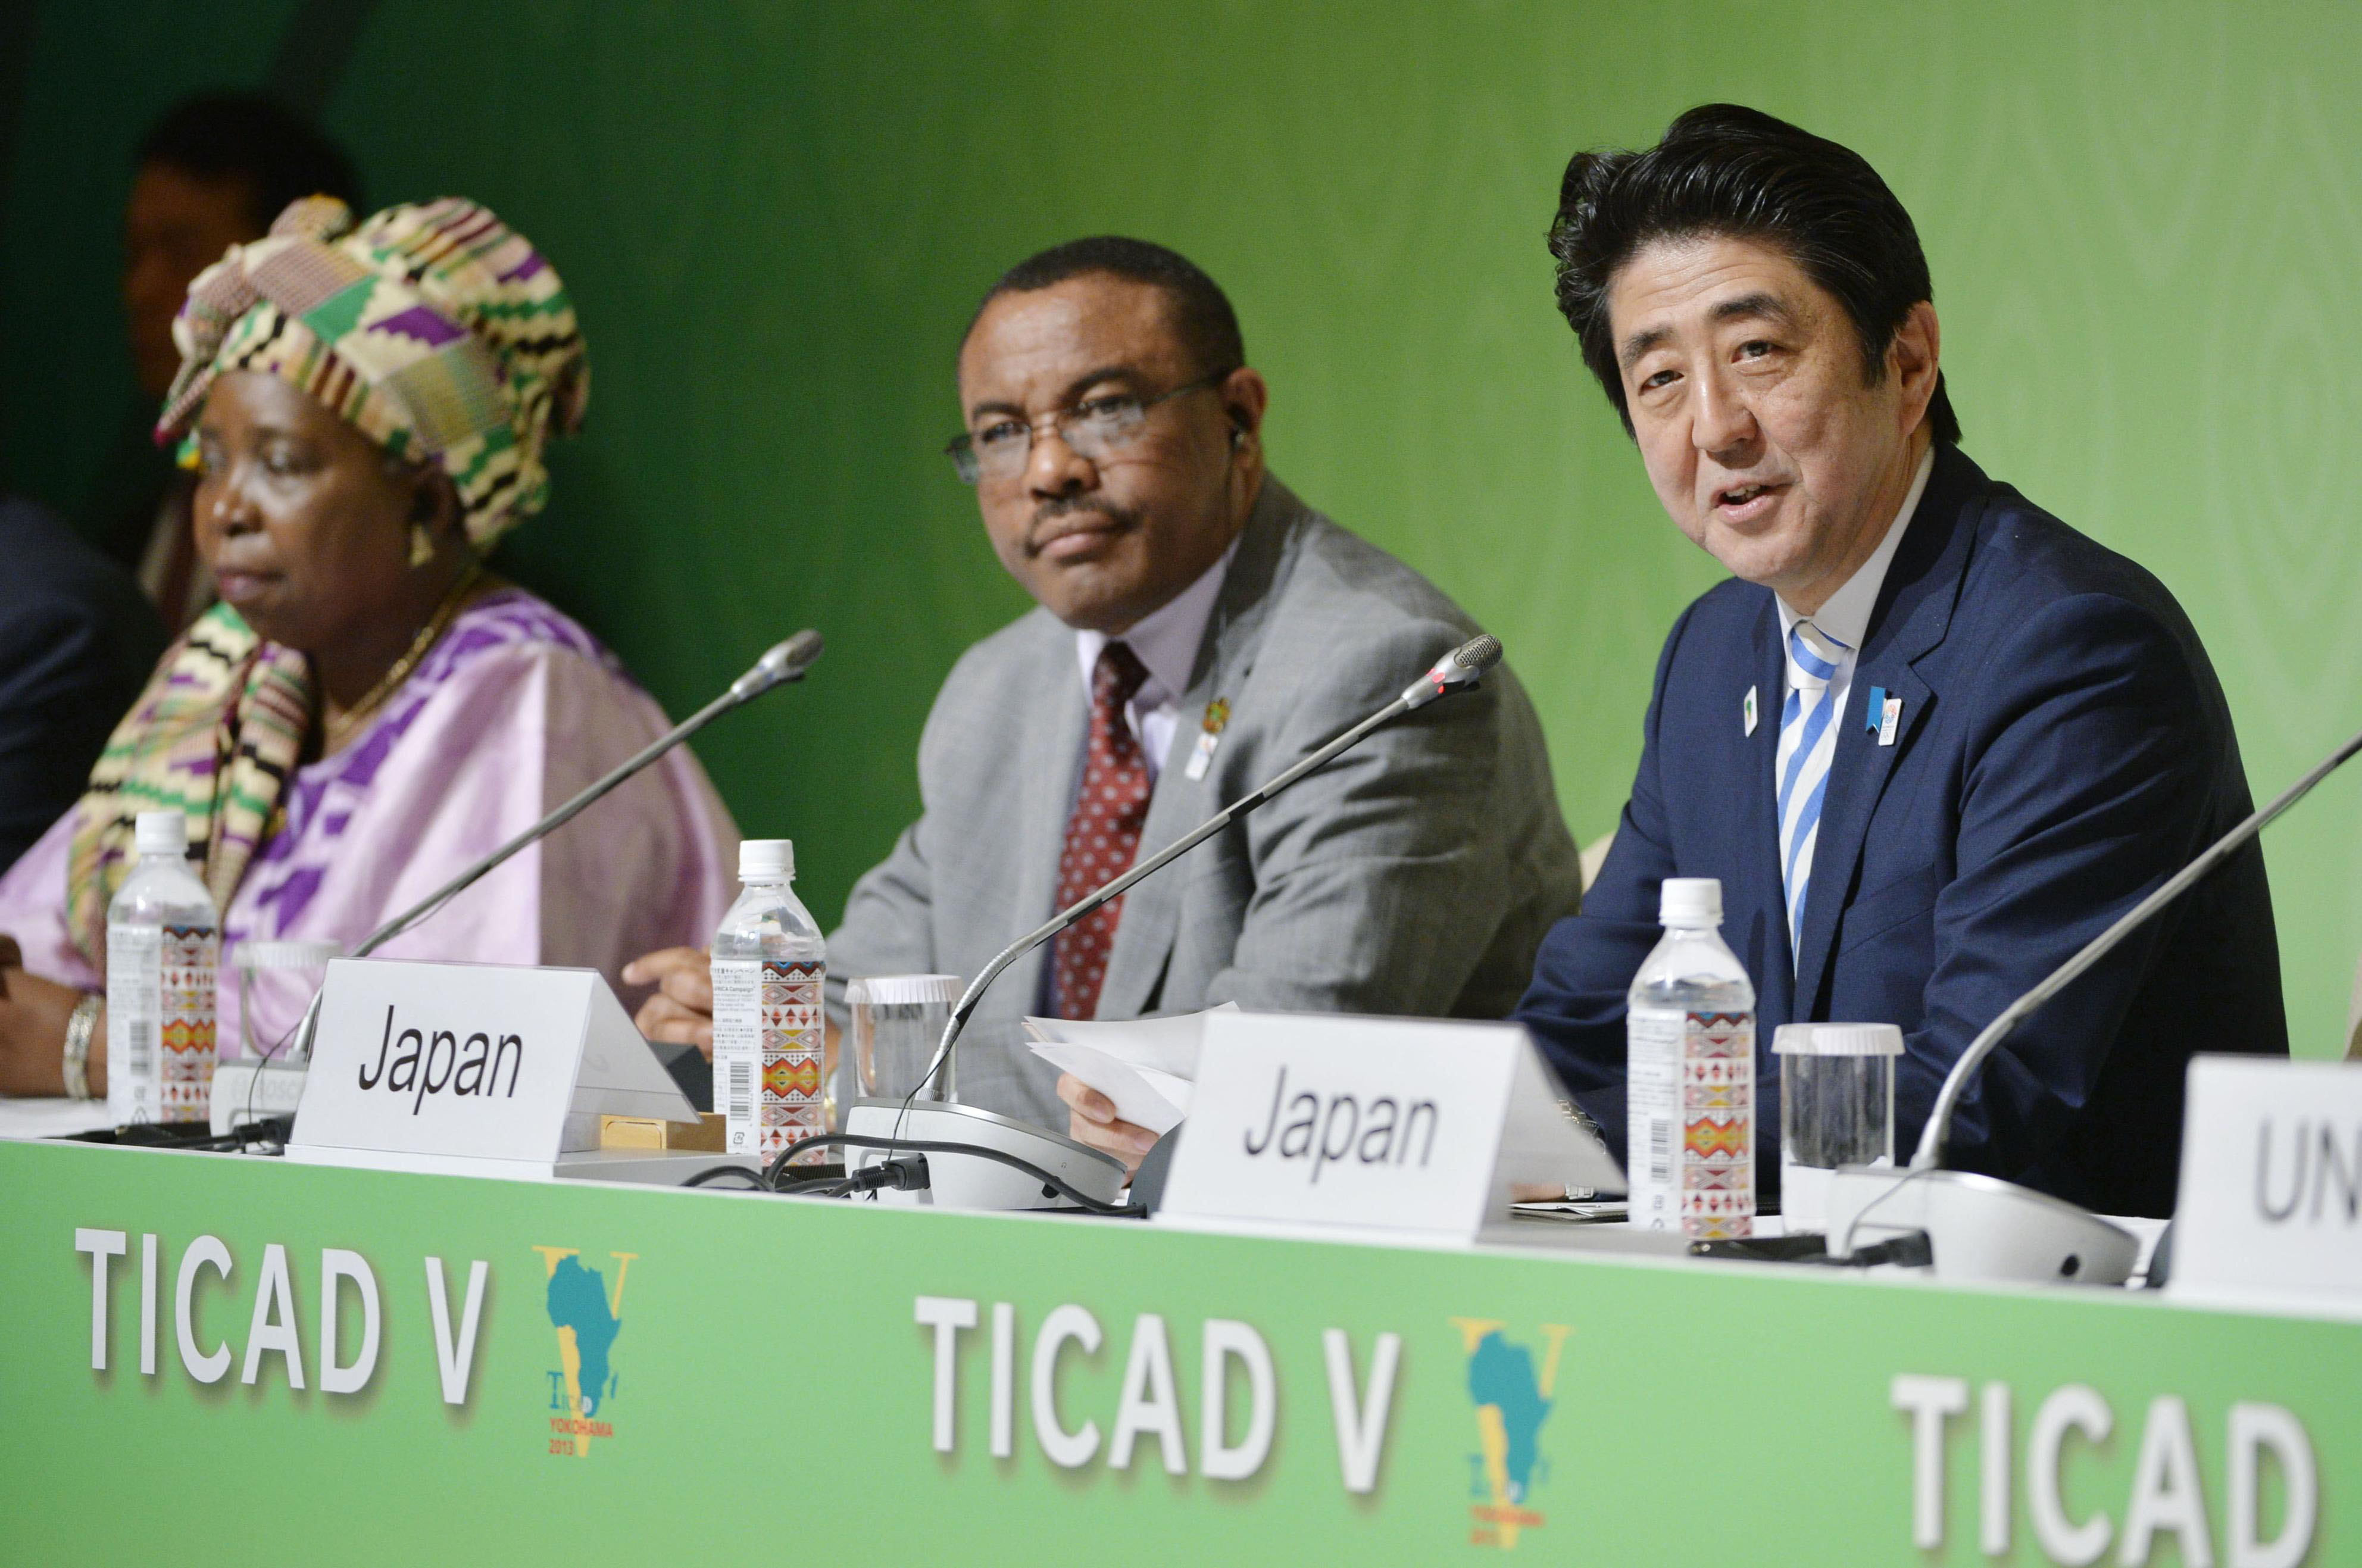 From left: African Union leader Nkosazana Clarice Dlamini-Zuma, Ethiopian Prime Minister Hailemariam Desalegn and Prime Minister Shinzo Abe are seen at the Tokyo International Conference on African Development in Yokohama on June 3, 2013. | KYODO